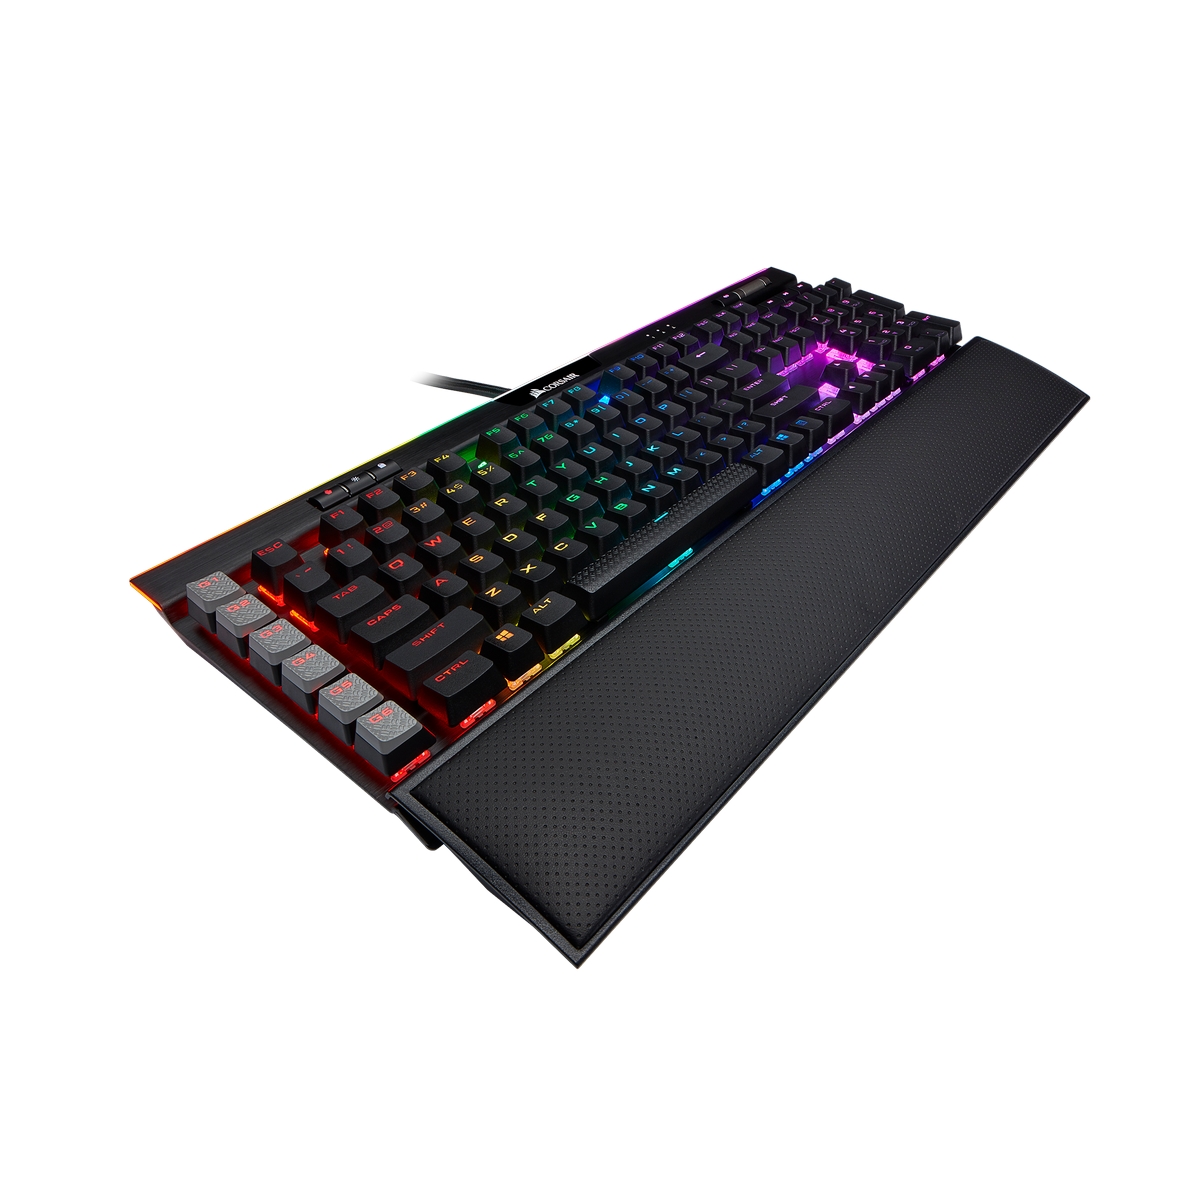 CORSAIR - Corsair K95 RGB PLATINUM XT RGB USB Mechanical Gaming Keyboard Cherry MX Blue (CH-9127411-UK)